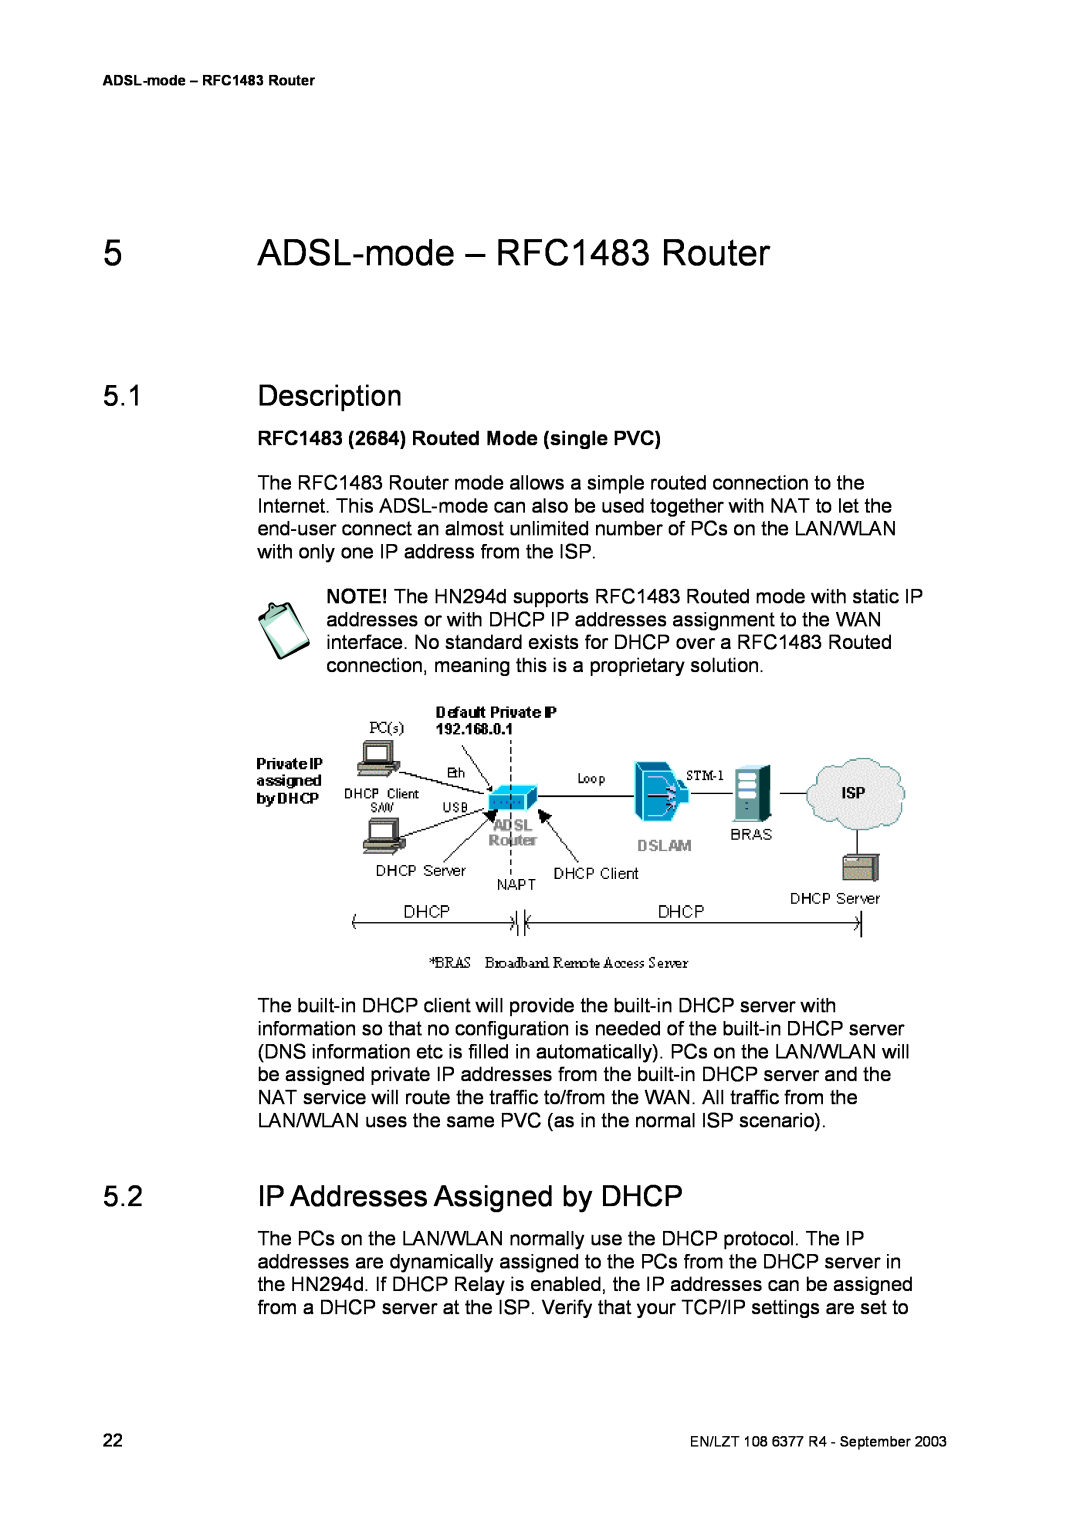 Garmin HN294DP/DI manual ADSL-mode - RFC1483 Router, Description, IP Addresses Assigned by DHCP 